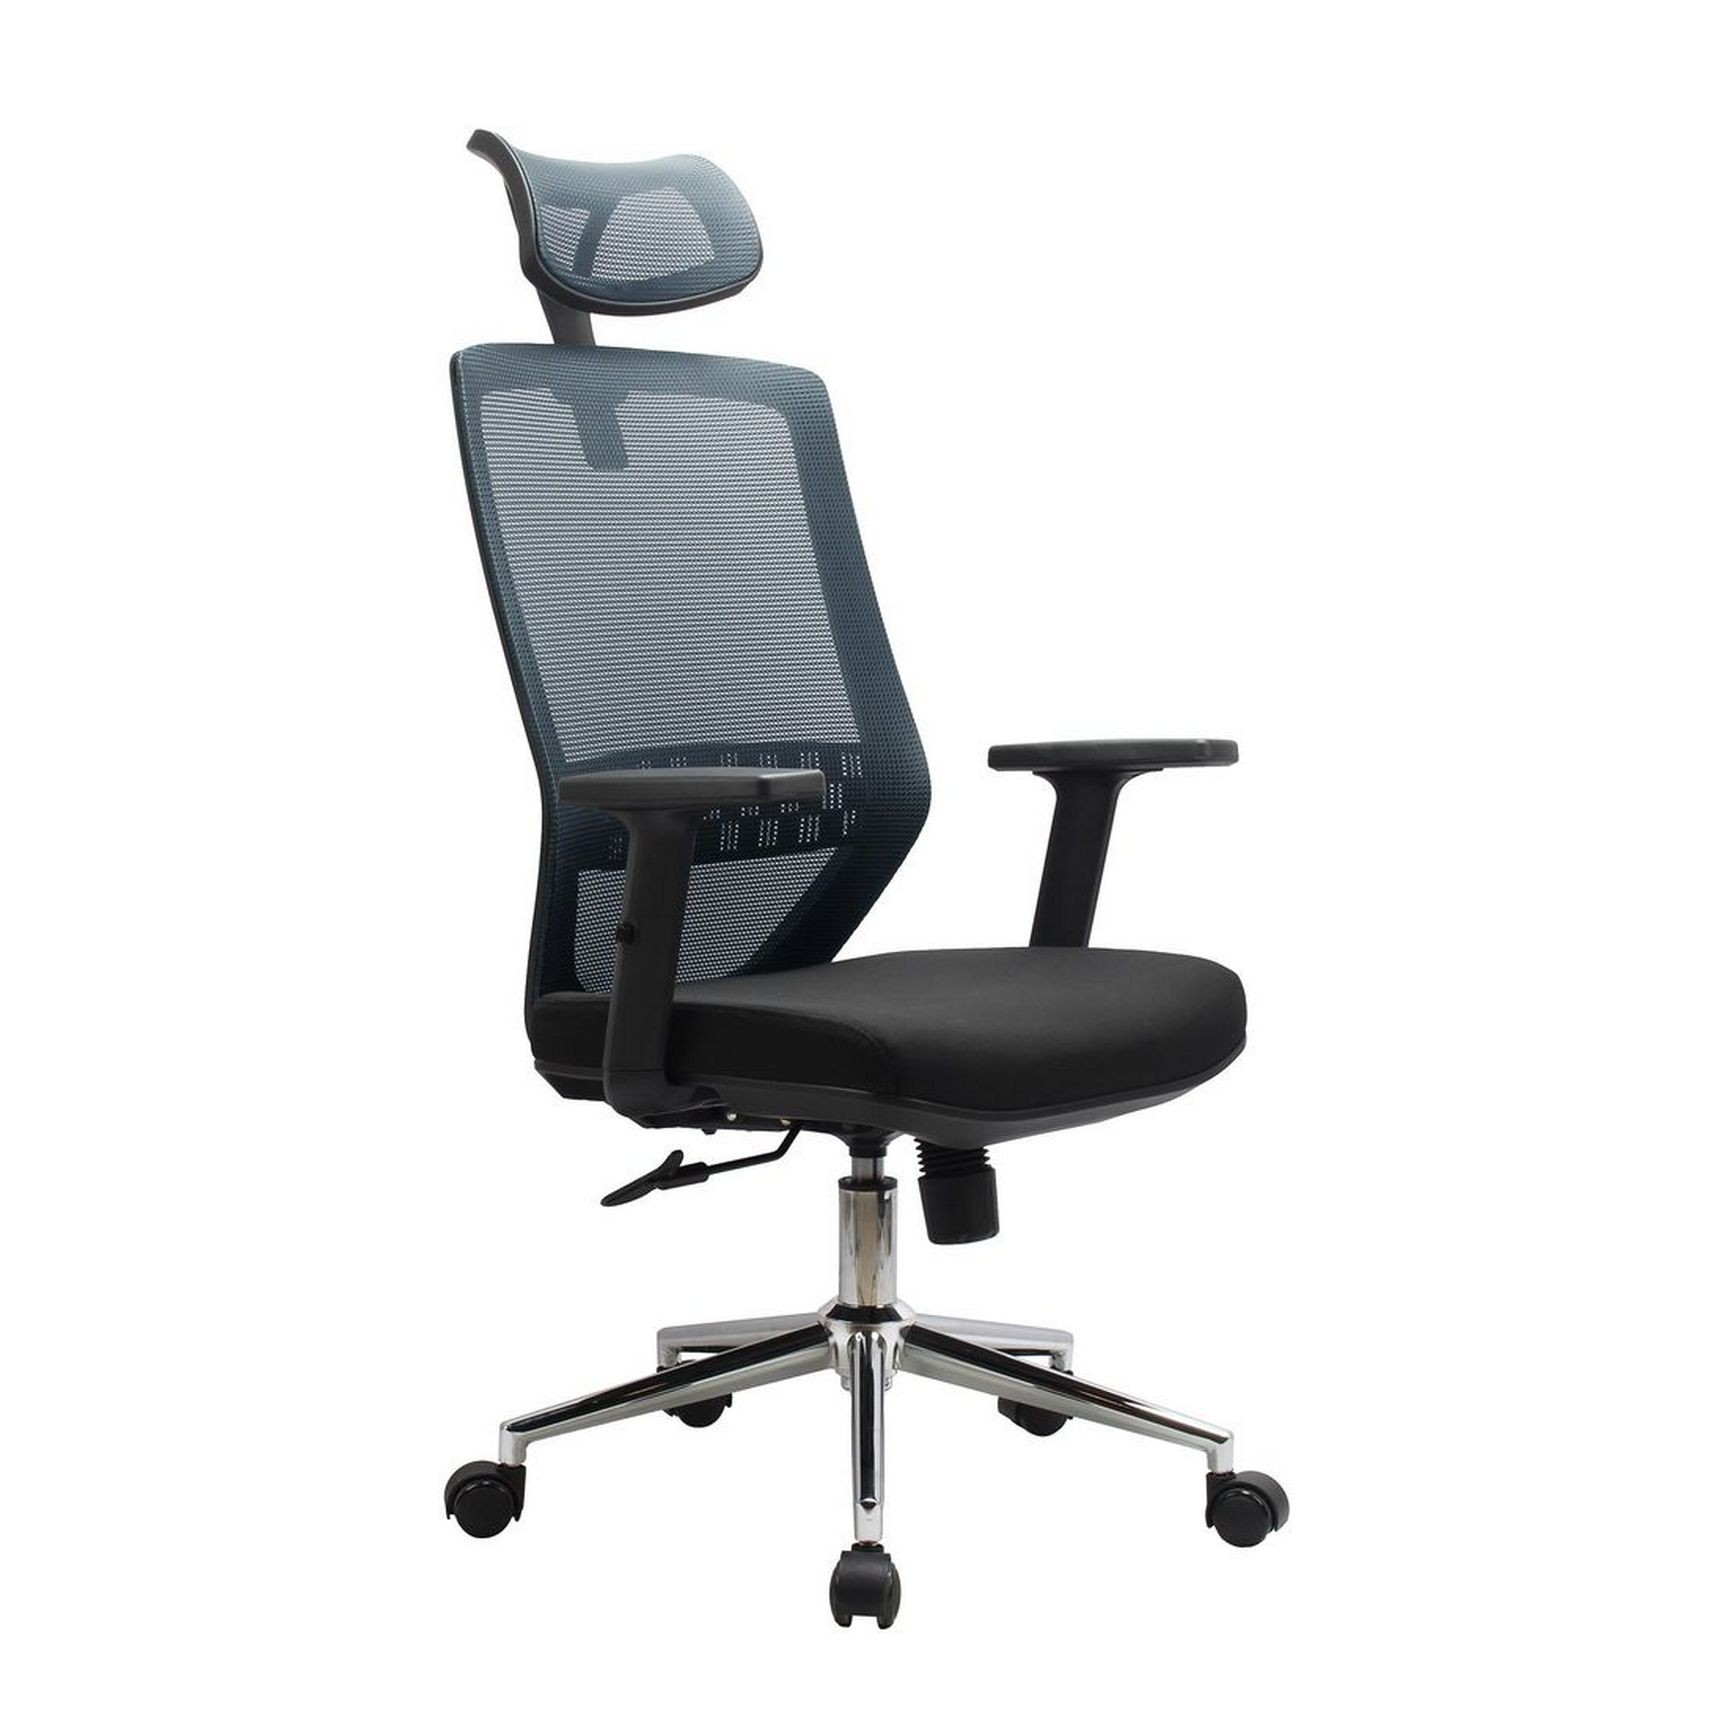 Кресло офисное Riva Chair 833 H